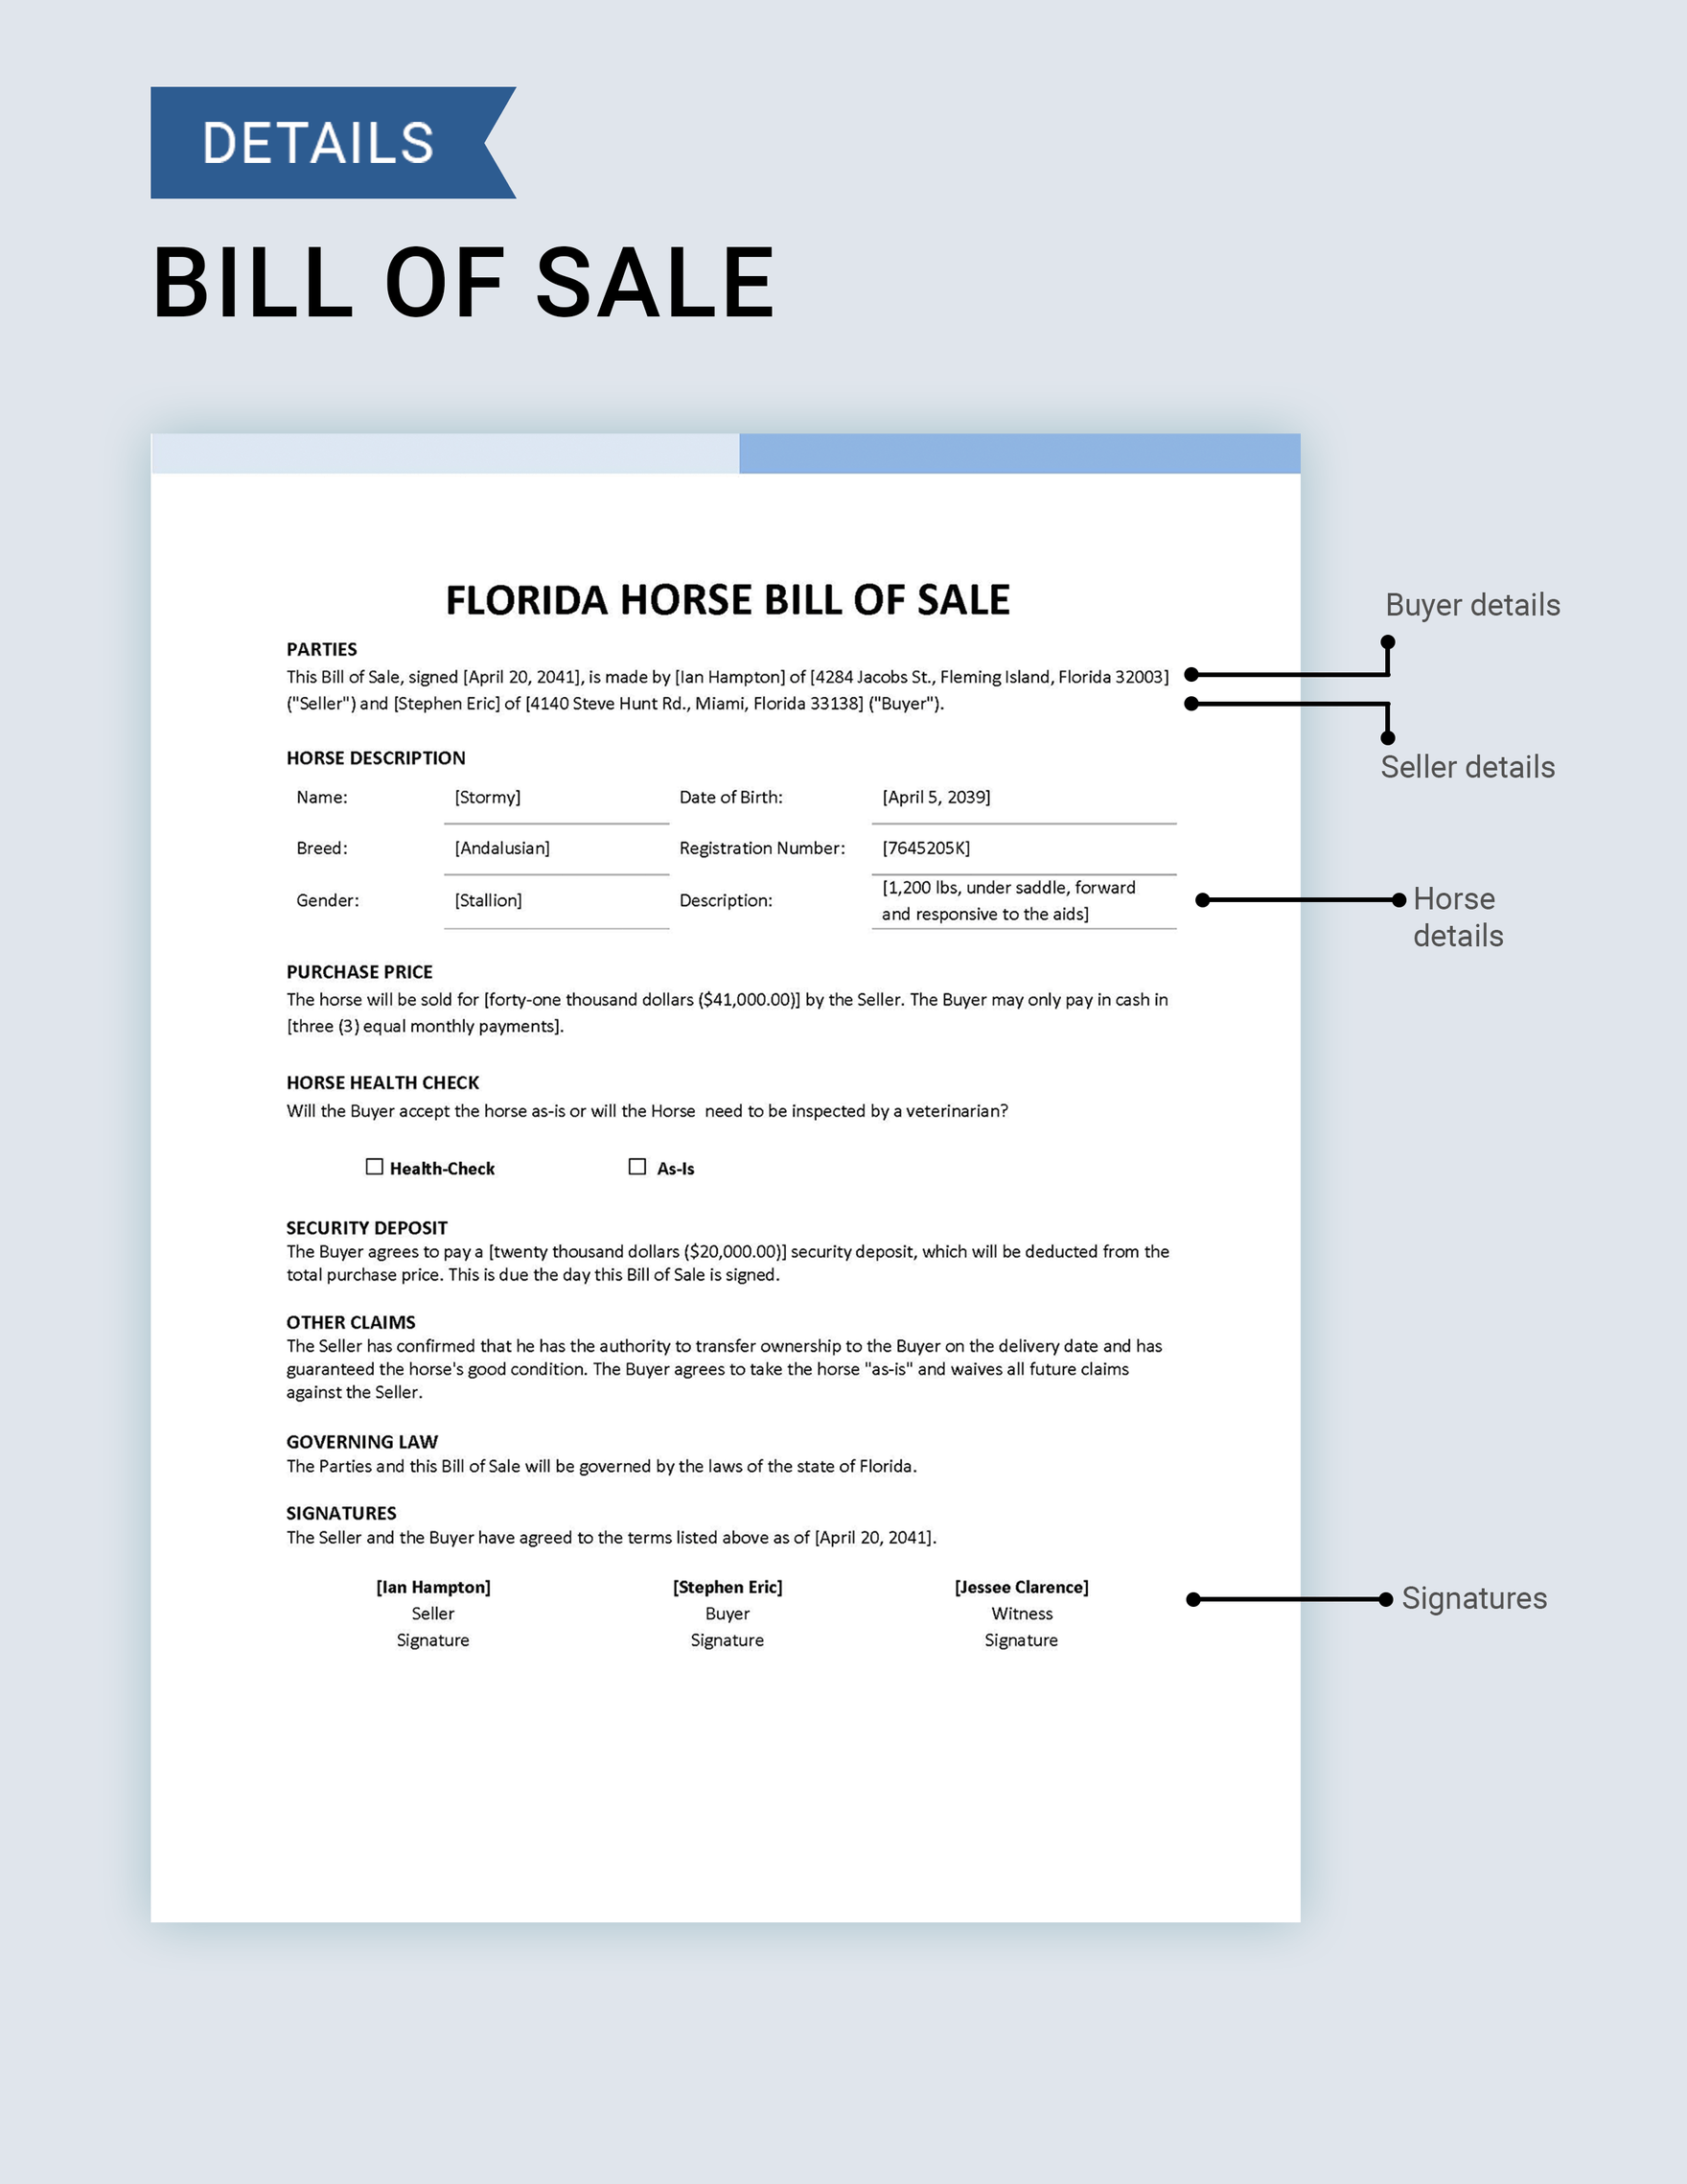 Florida Horse Bill of Sale Template